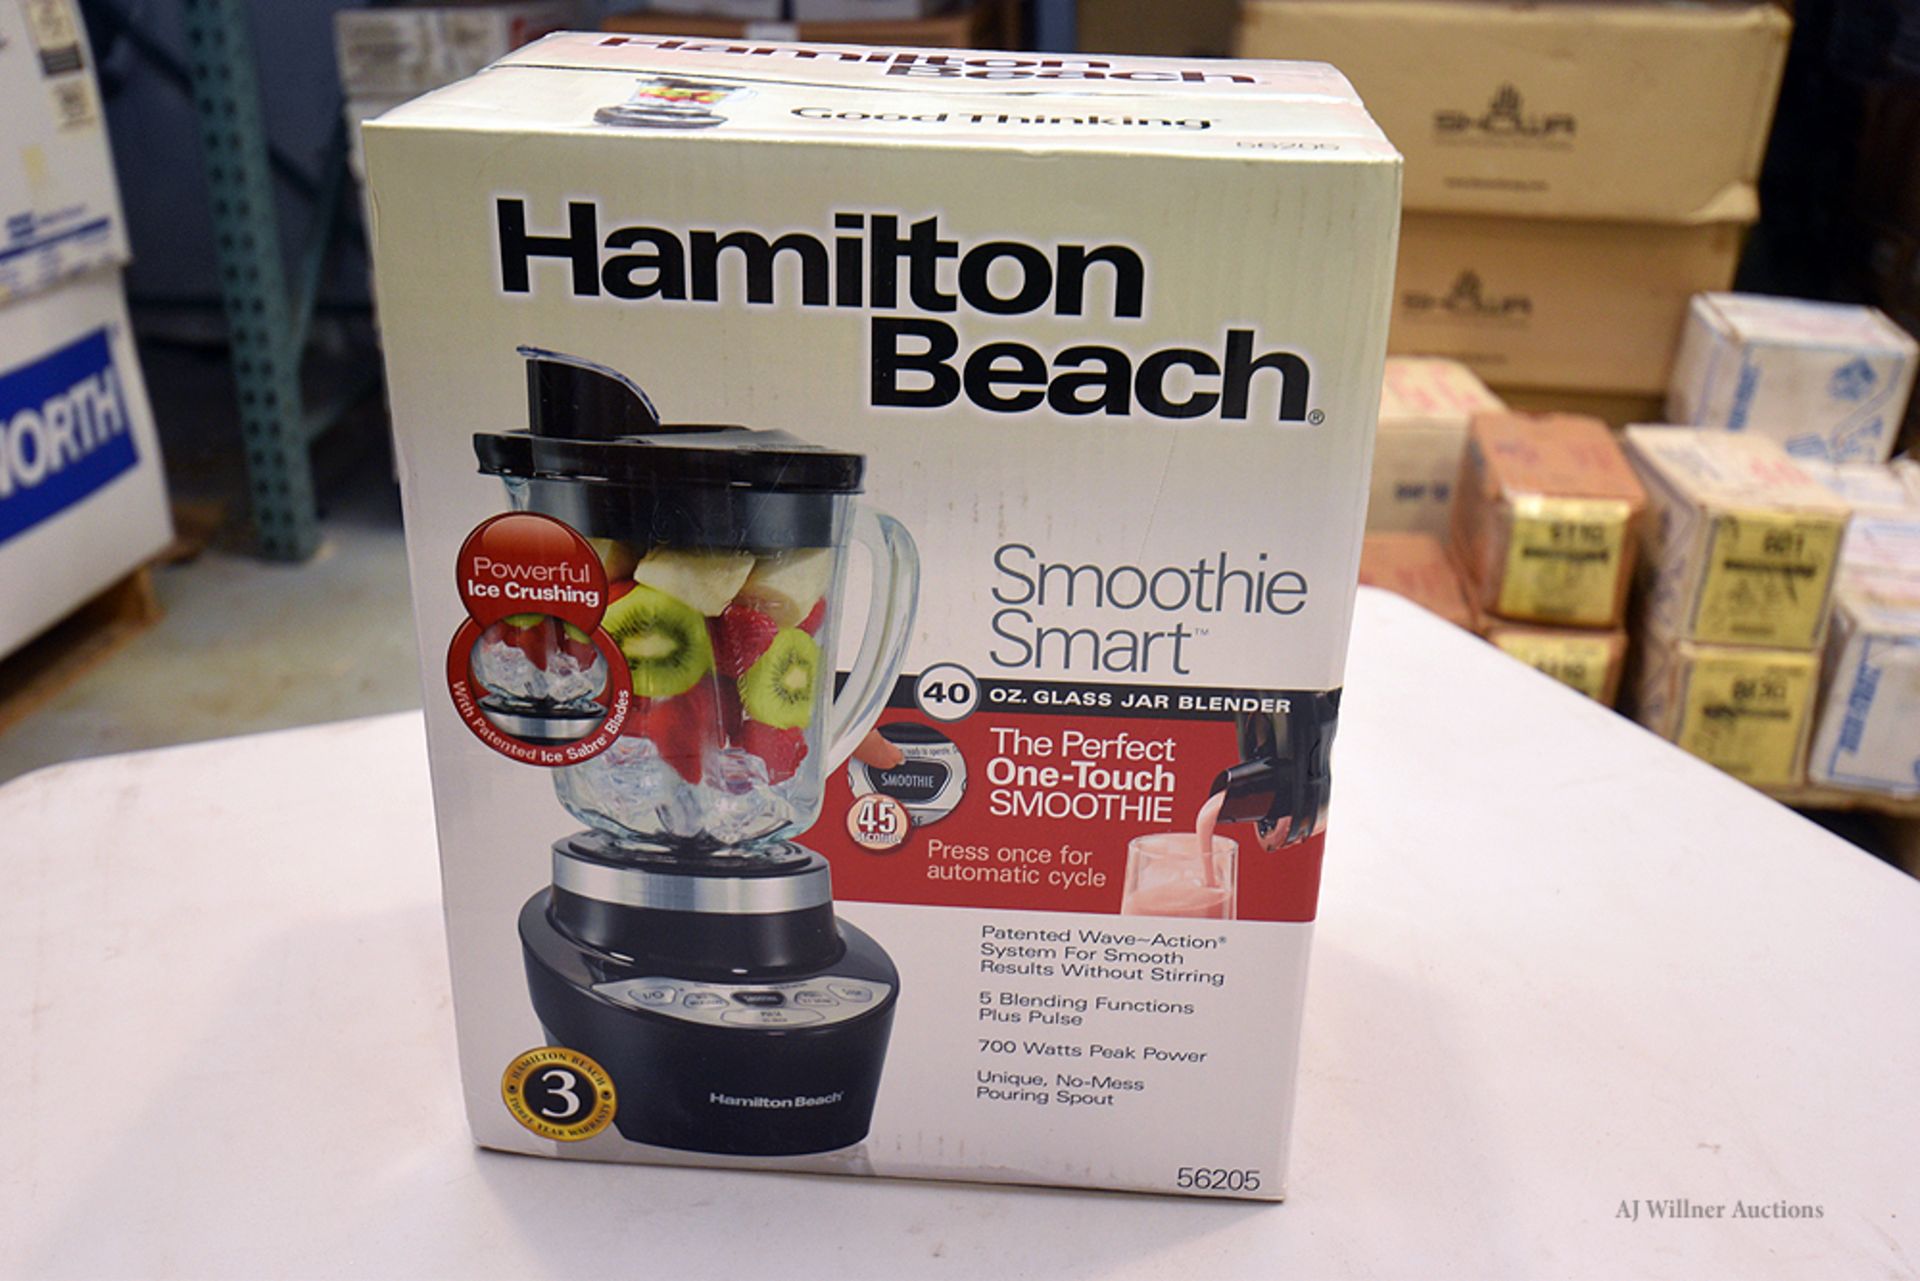 Hamilton Beach, "Smoothie Smart" Blender, Model 56205